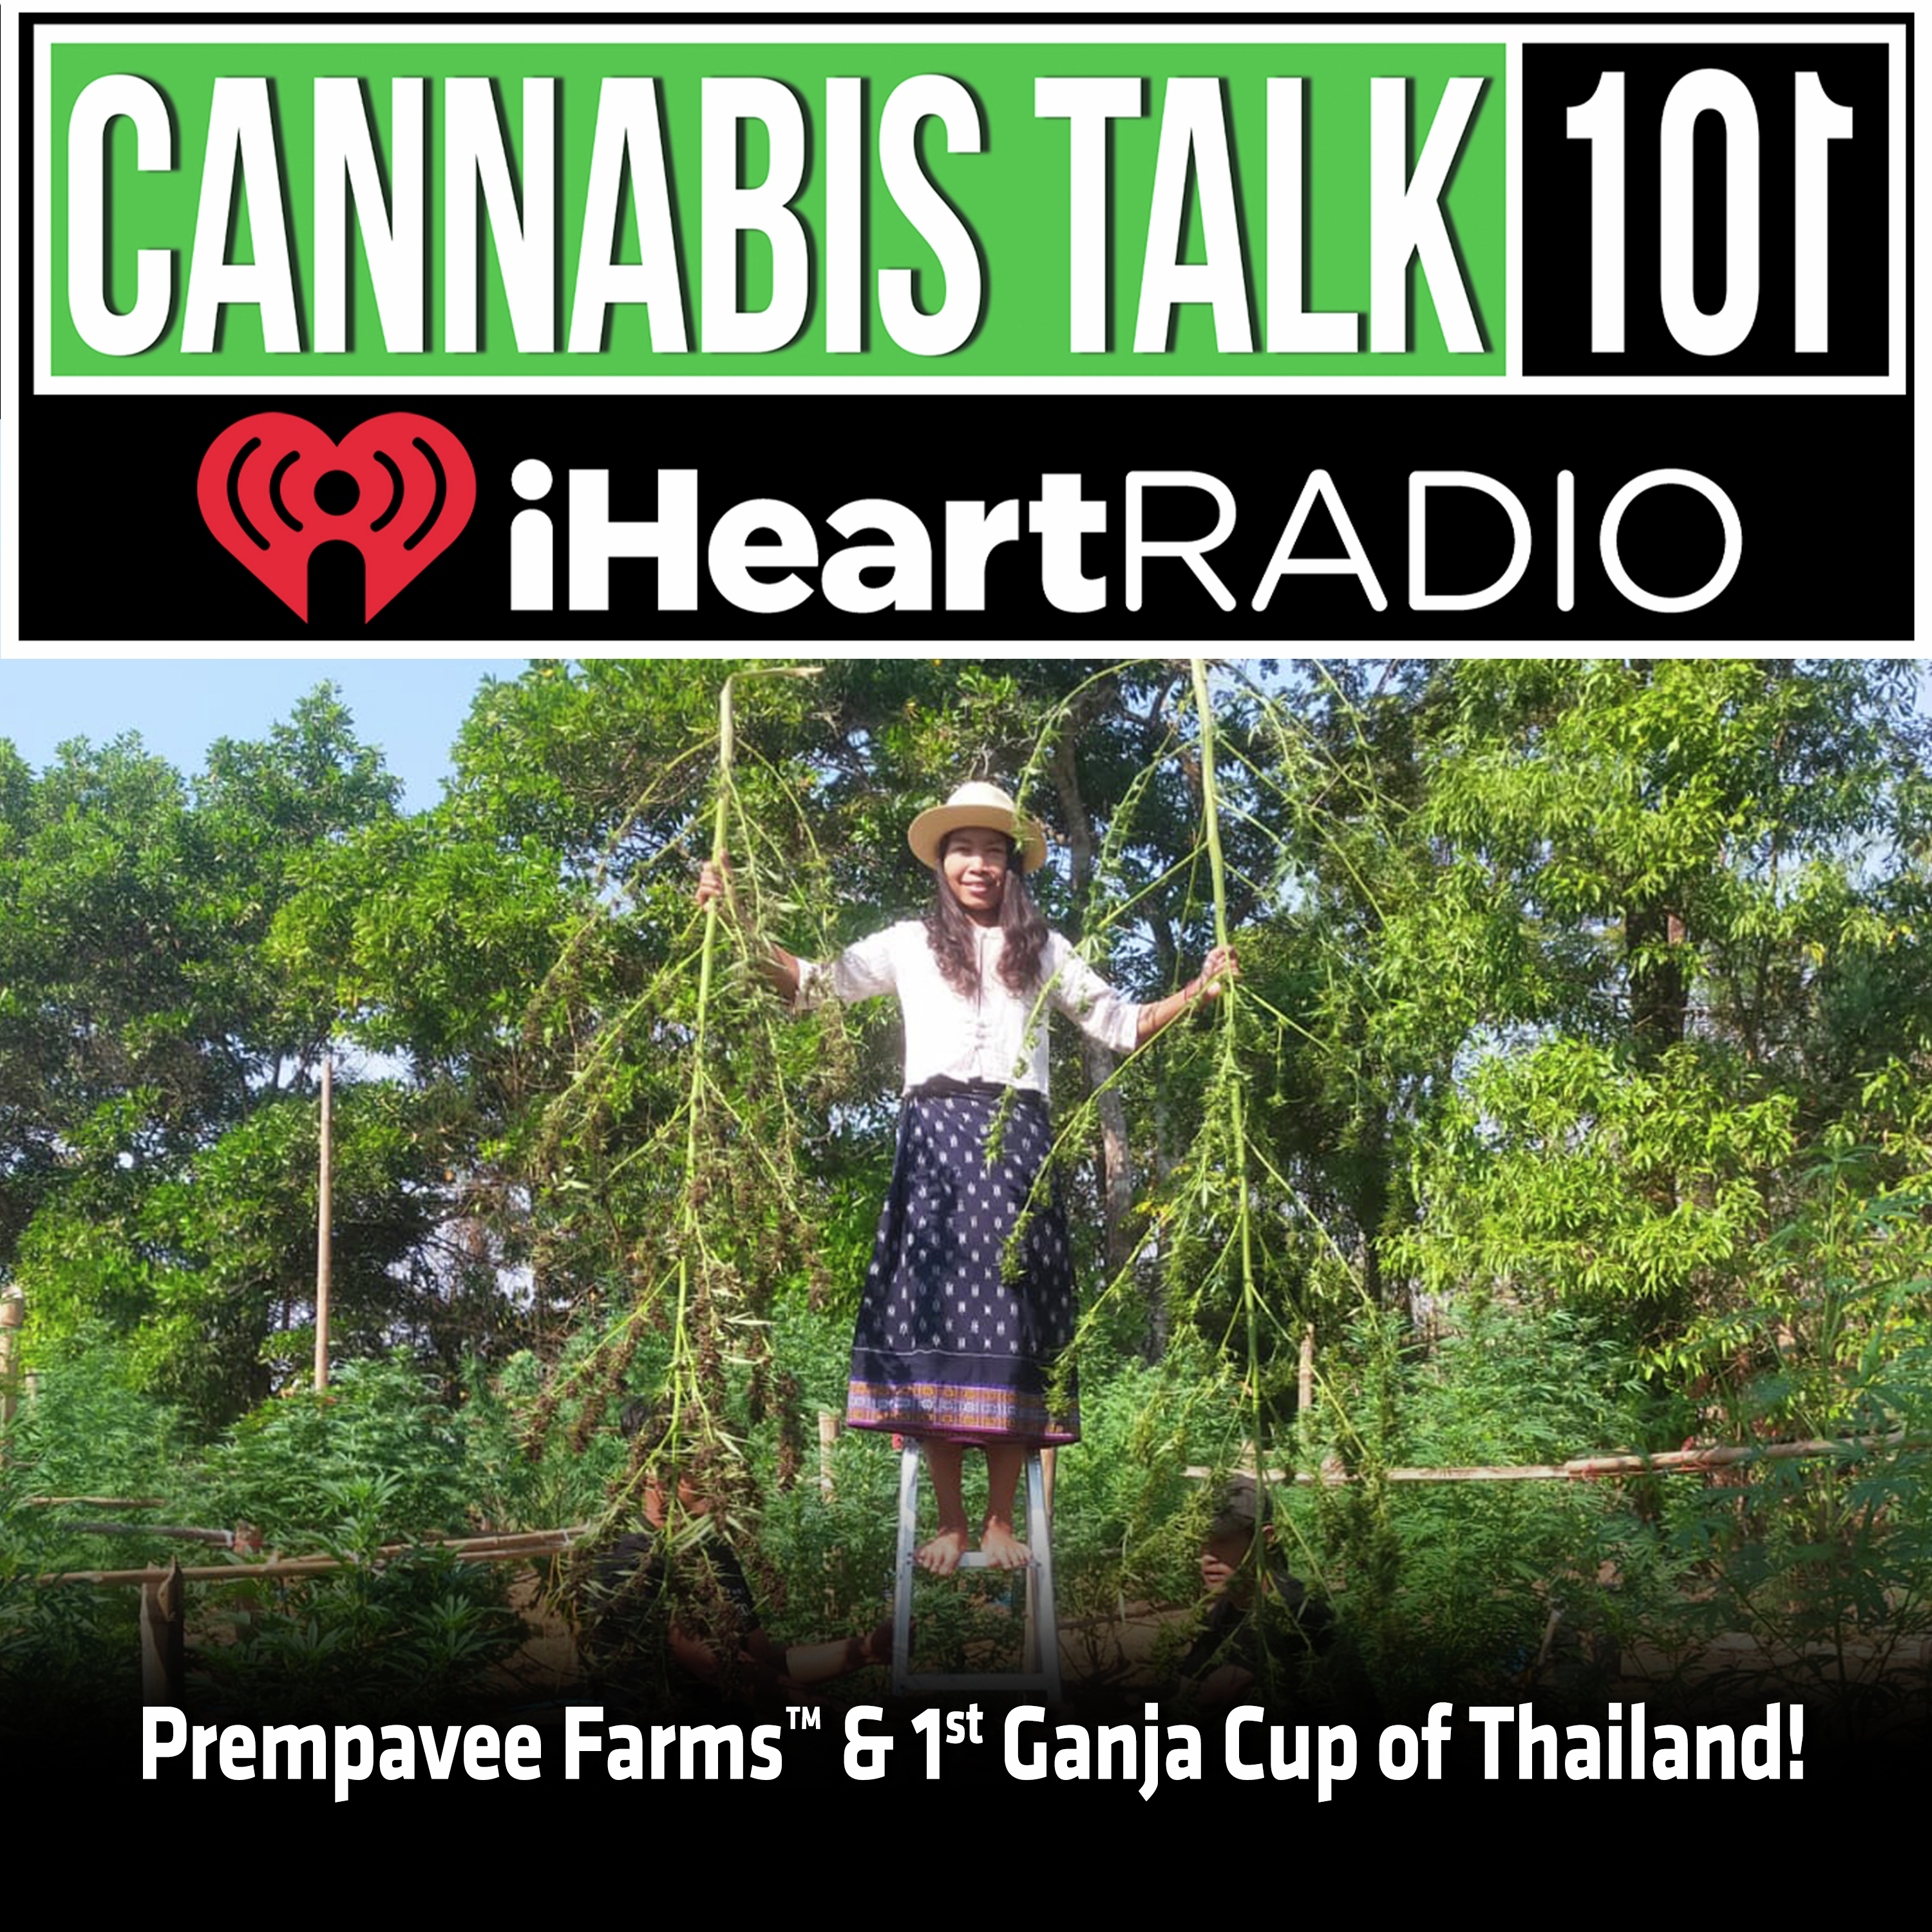 Prempavee Farms & 1st Ganja Cup of Thailand!